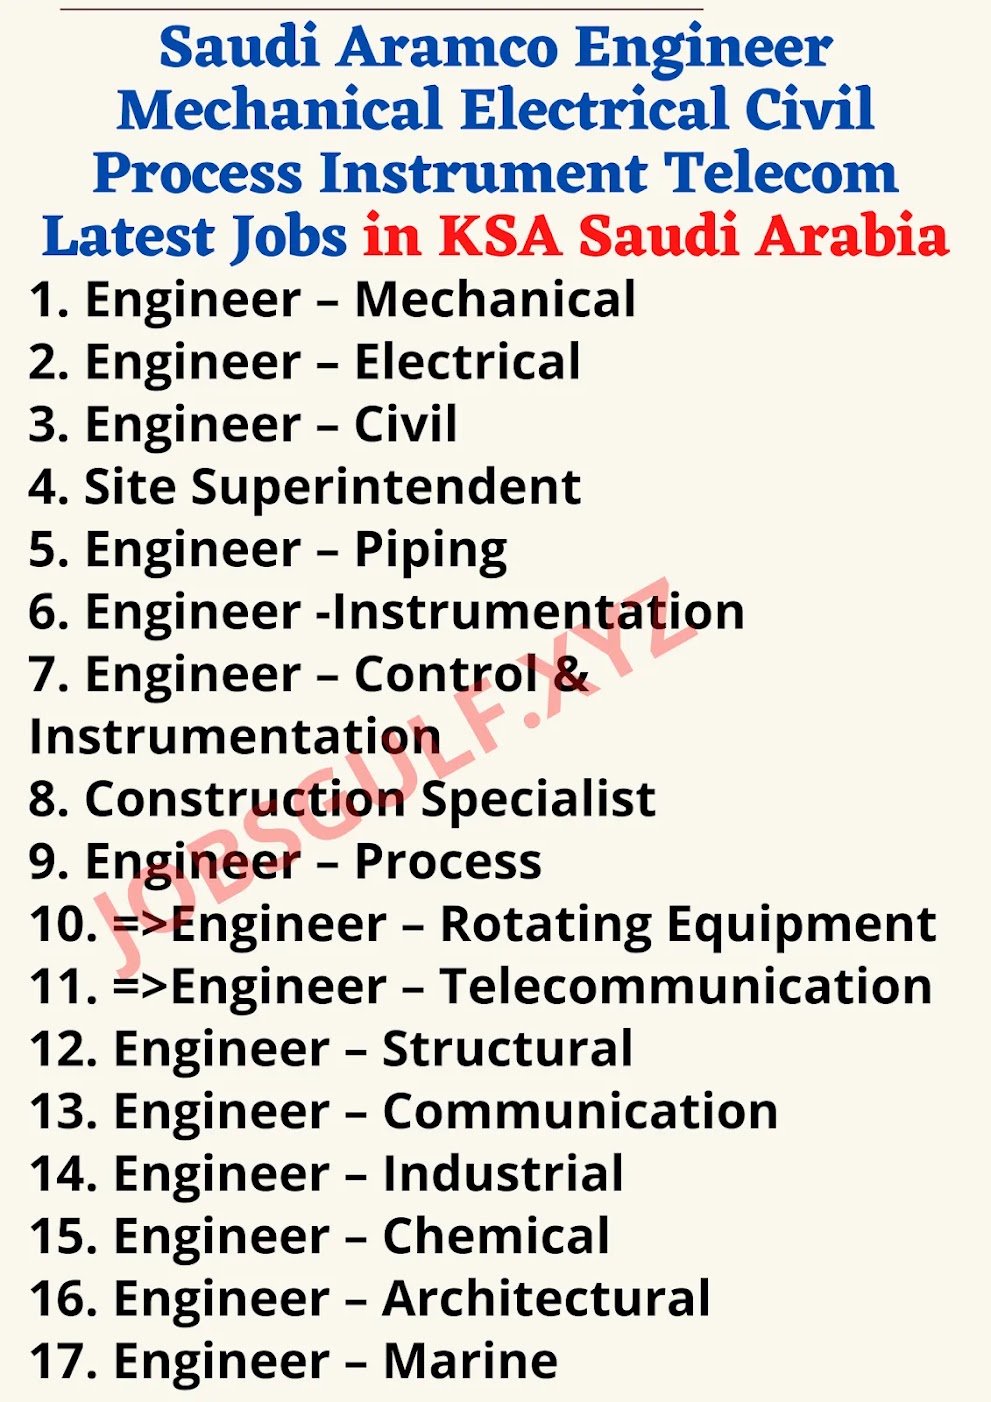 Saudi Aramco Engineer Mechanical Electrical Civil Process Instrument Telecom Latest Jobs